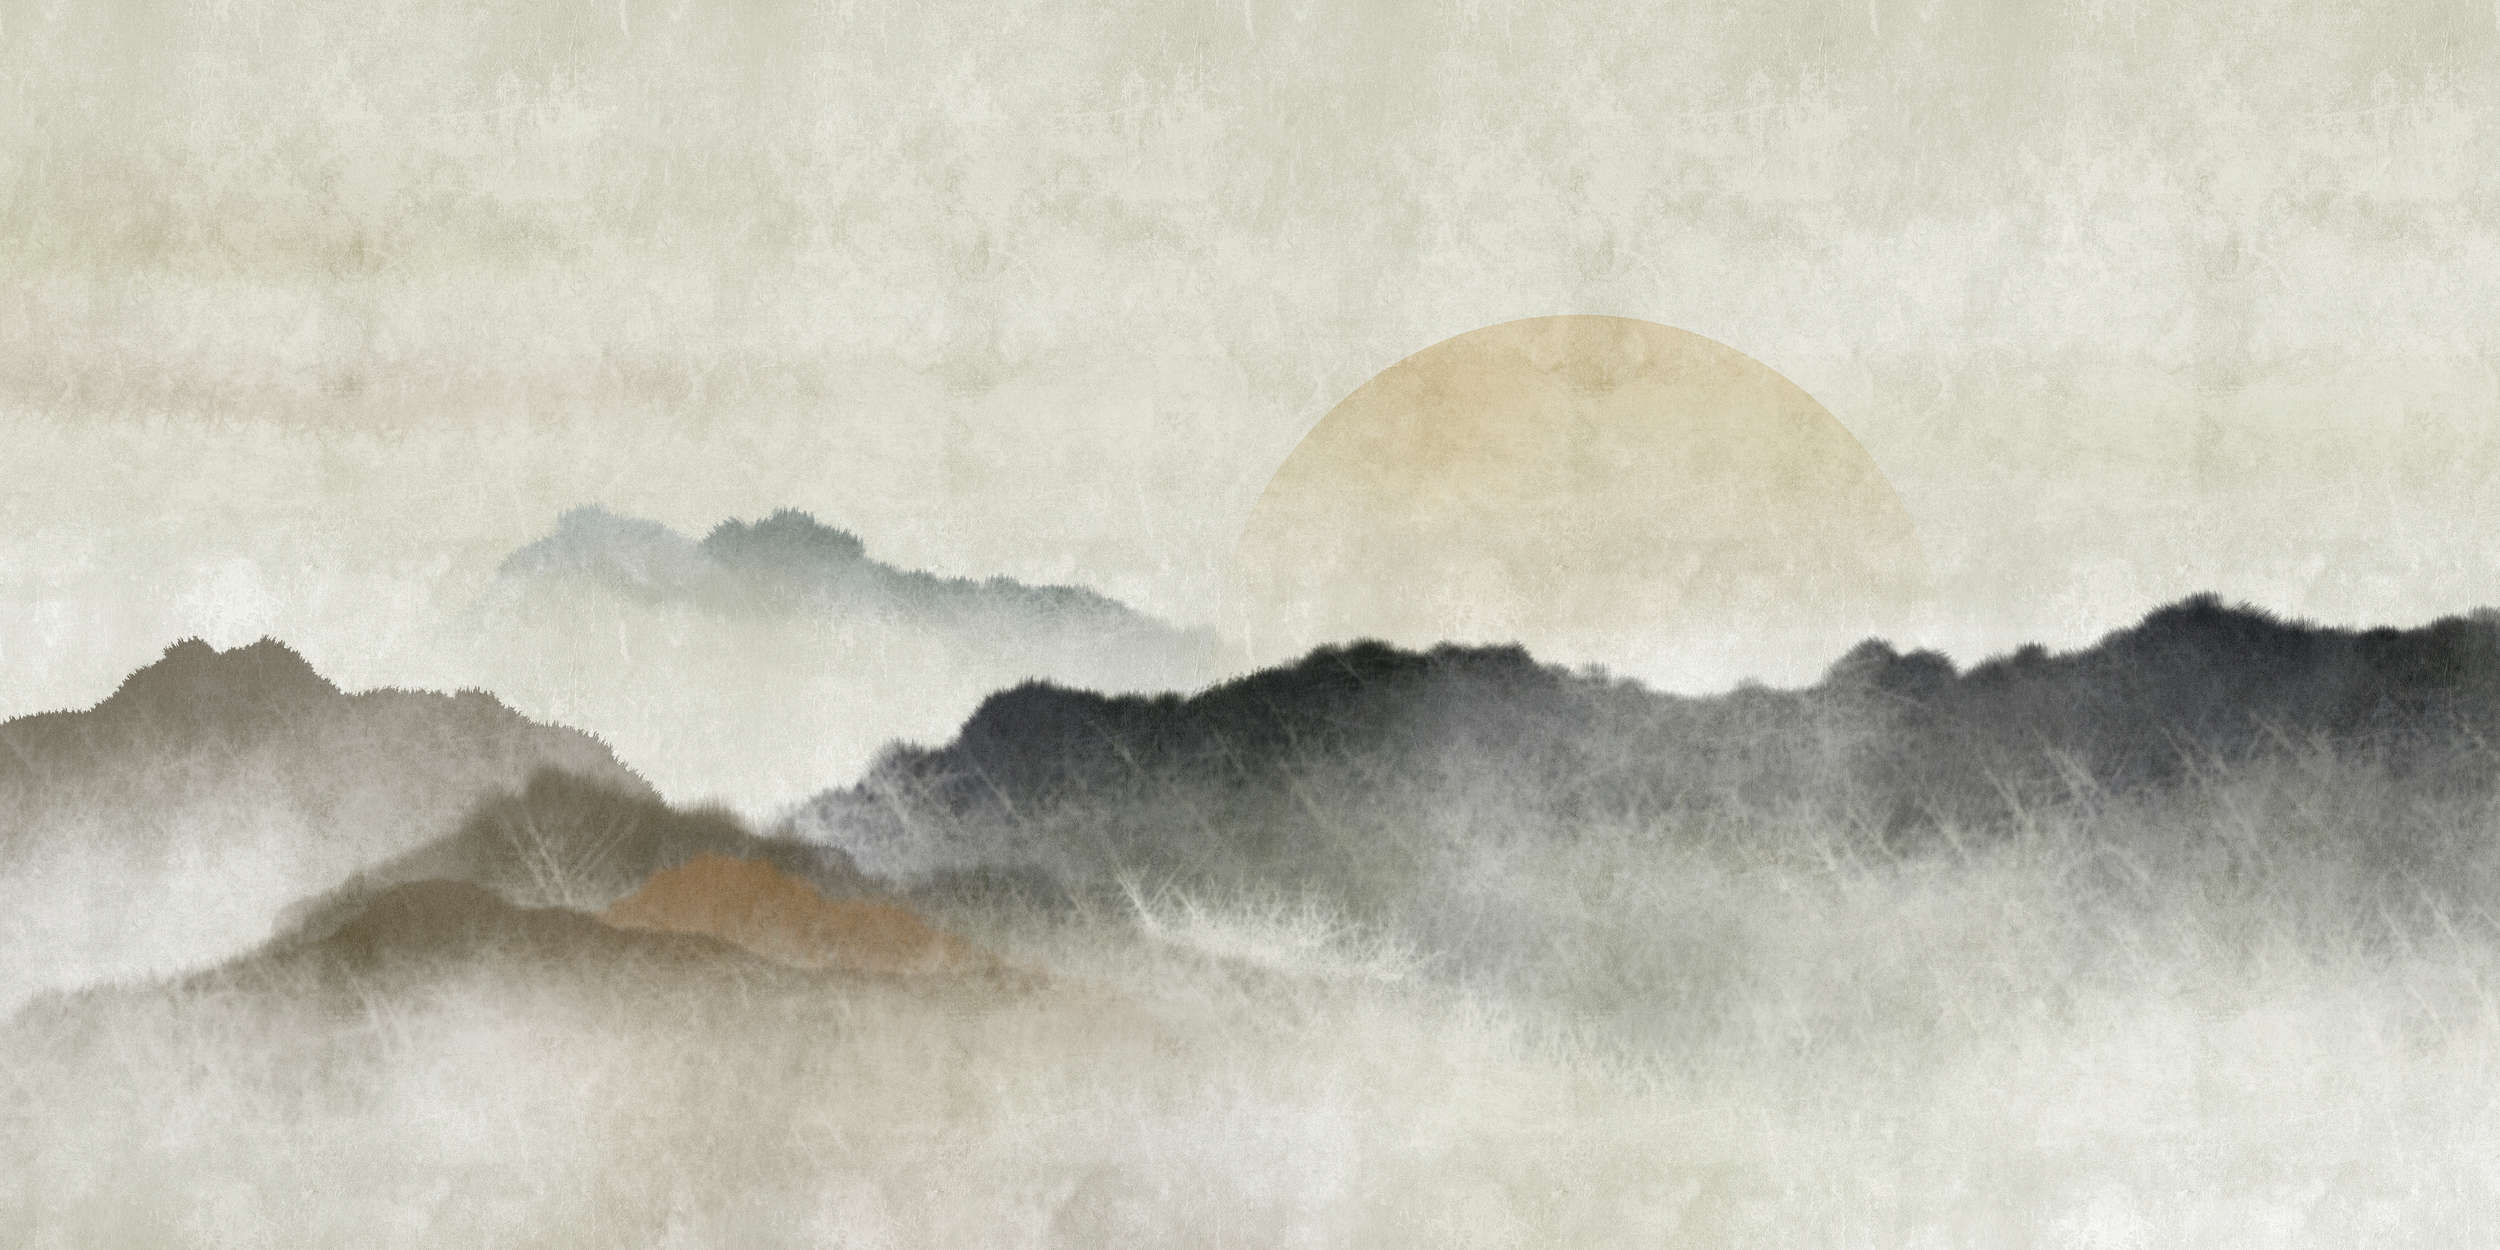             Akaishi 1 – Fototapete Asian Print Bergkette im Morgengrauen
        